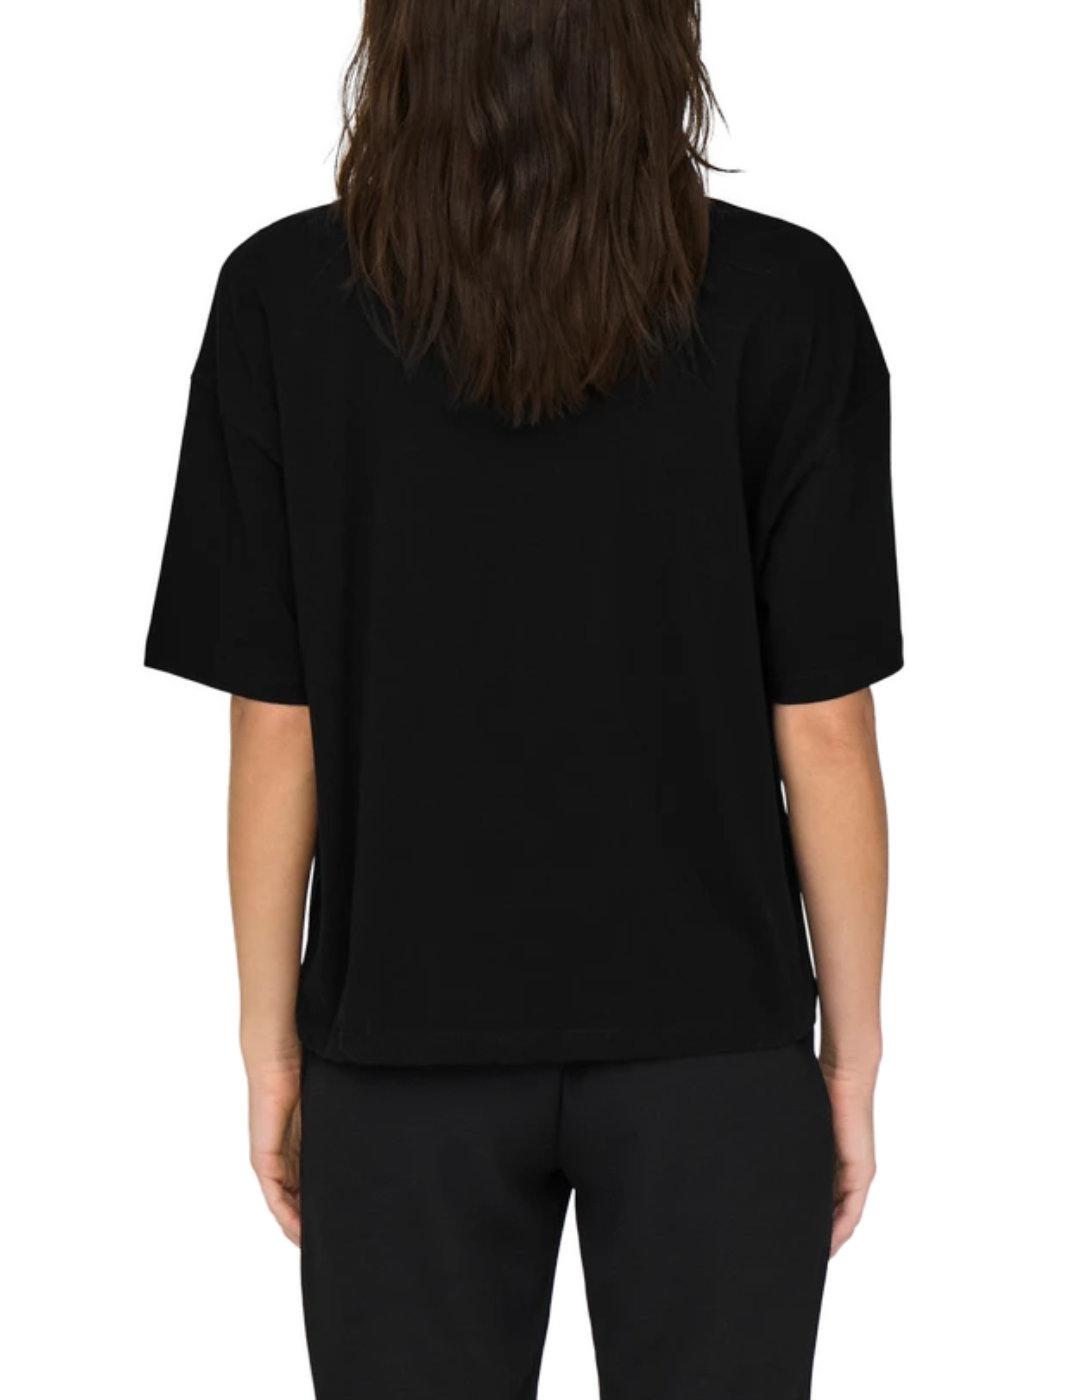 Camiseta Only Lasta negro manga corta regular para mujer